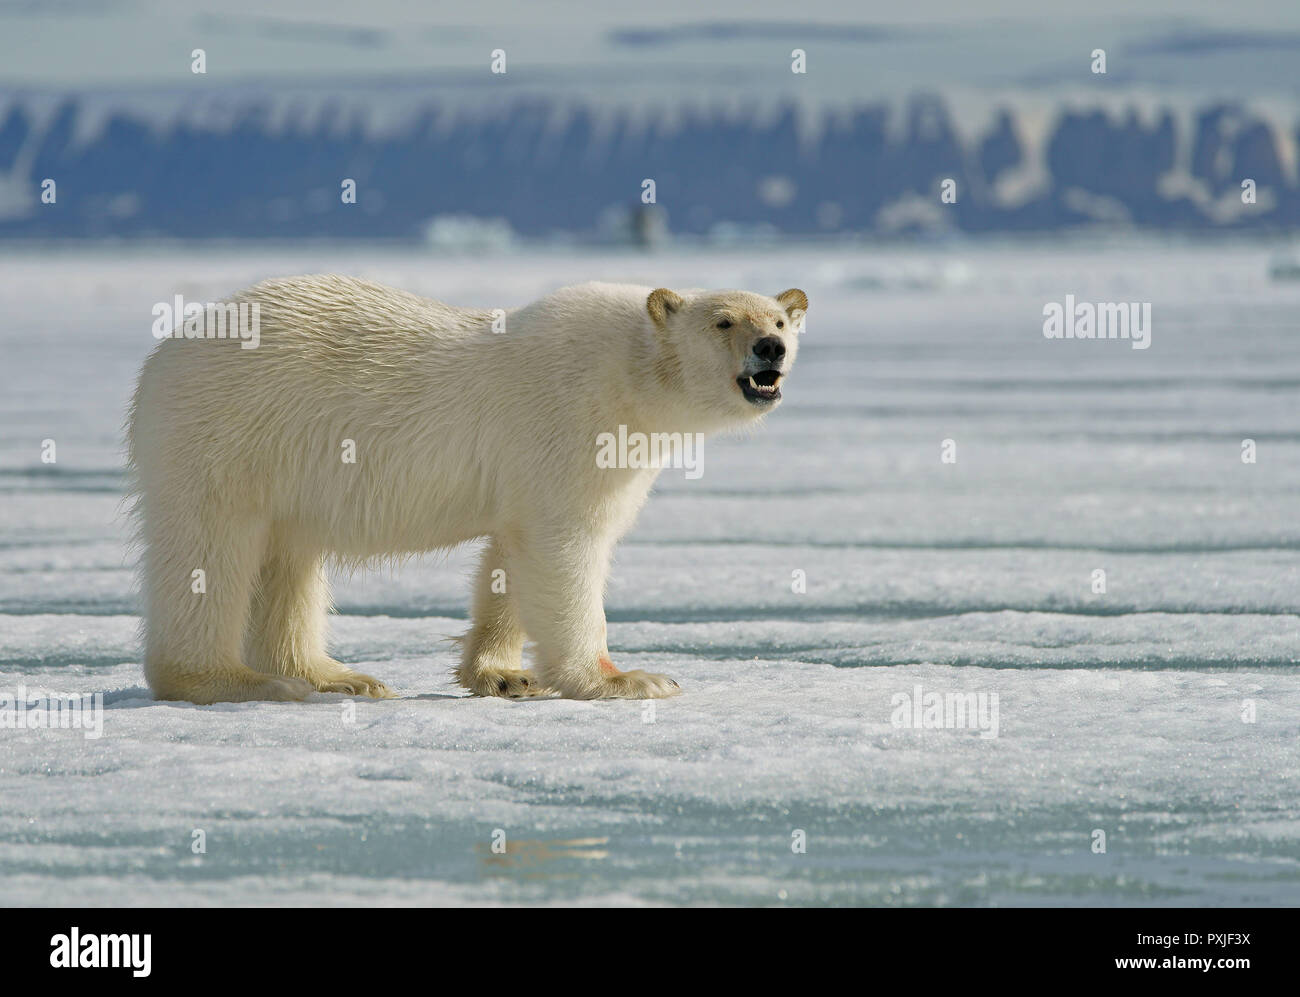 Polar bear (Ursus maritimus), young animal standing on ice, Svalbard, Norwegian Arctic, Norway Stock Photo